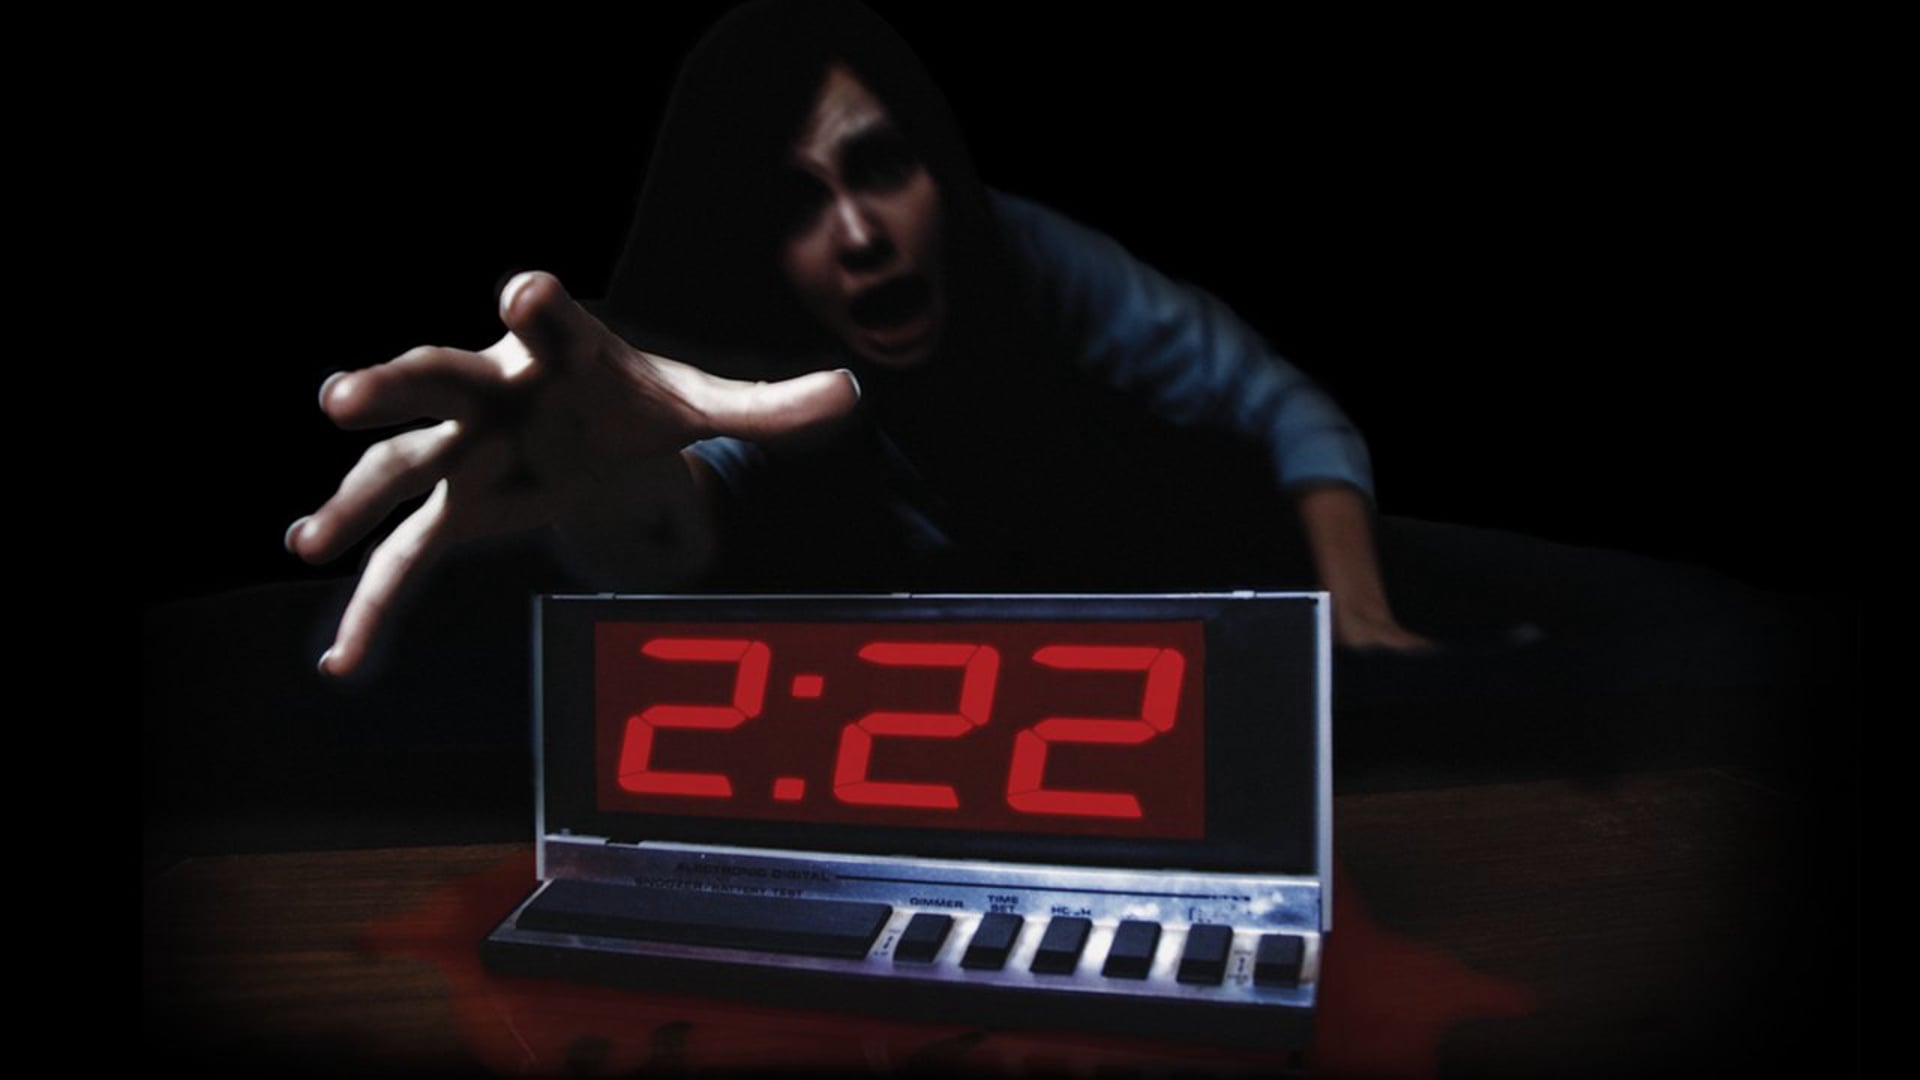 2:22 (Short Film)